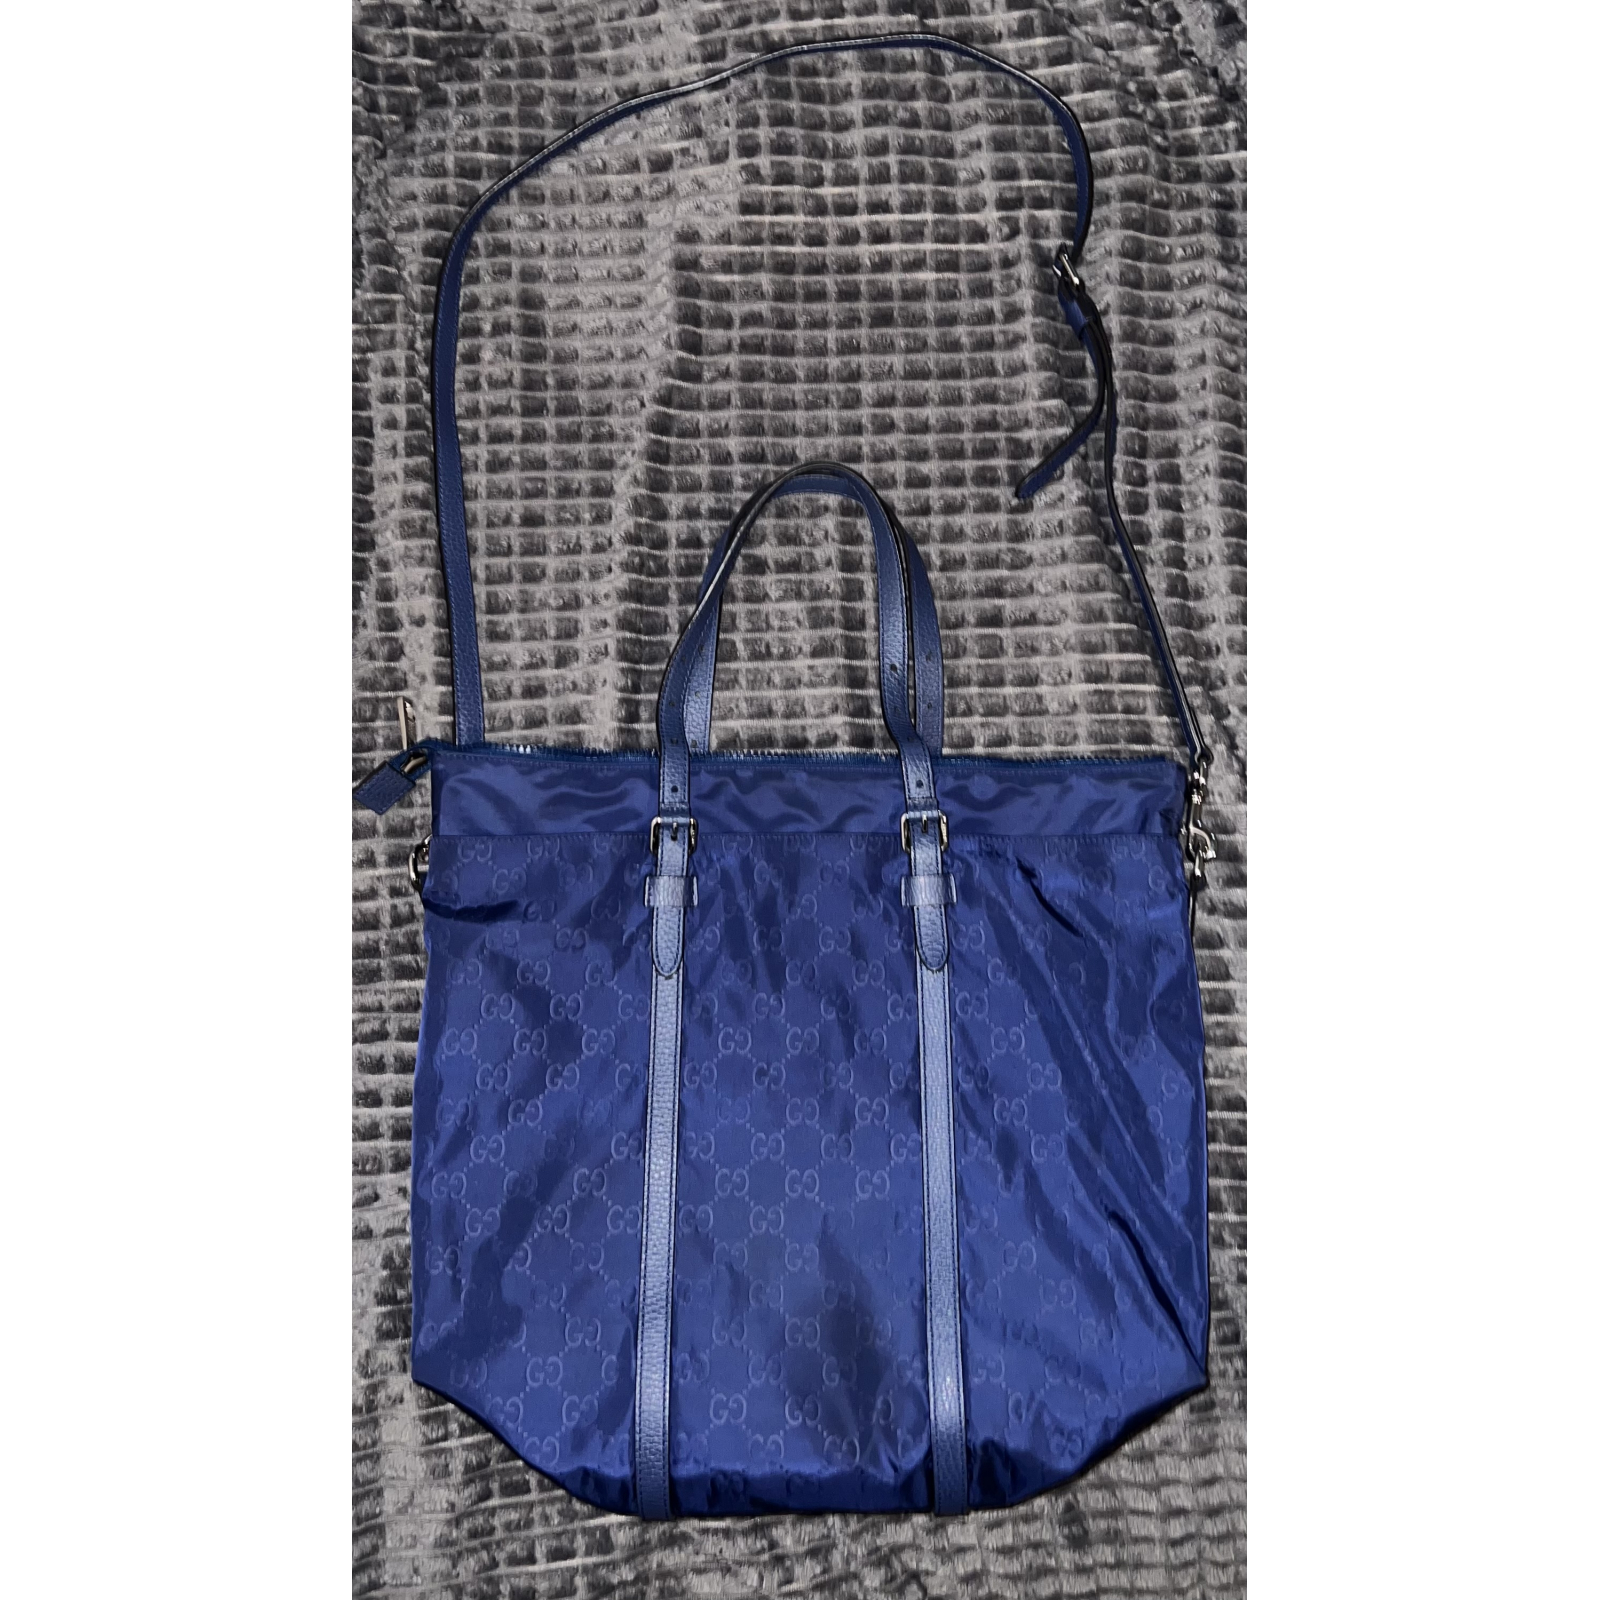 Gucci GG Nylon Navy blue Tote Crossbody Bag